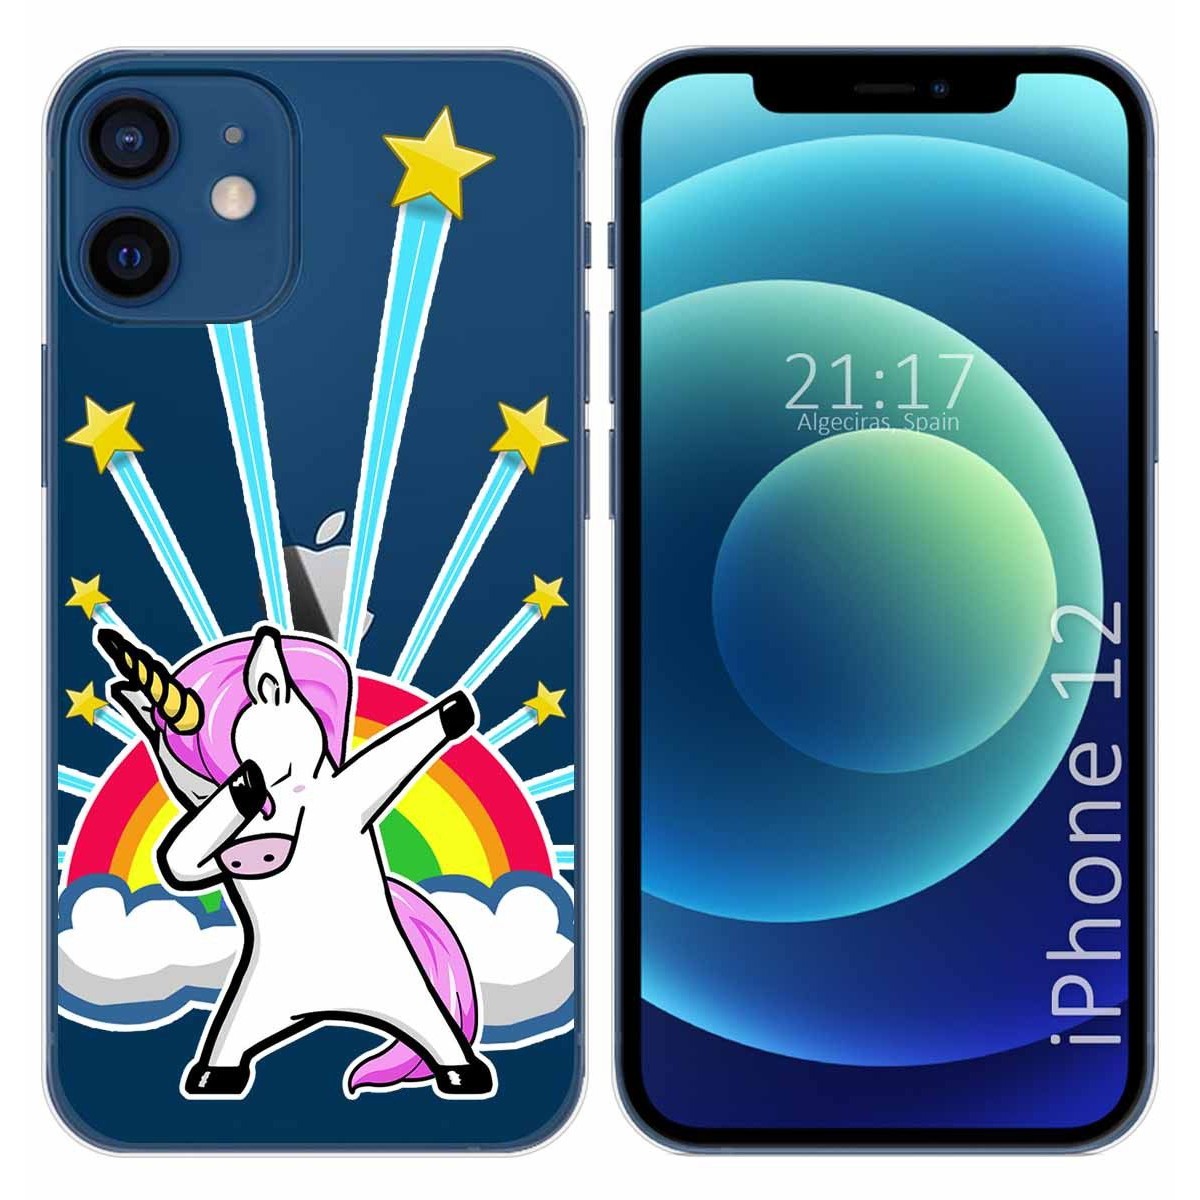 Funda Gel Transparente para Iphone 12 / 12 Pro (6.1) diseño Unicornio Dibujos